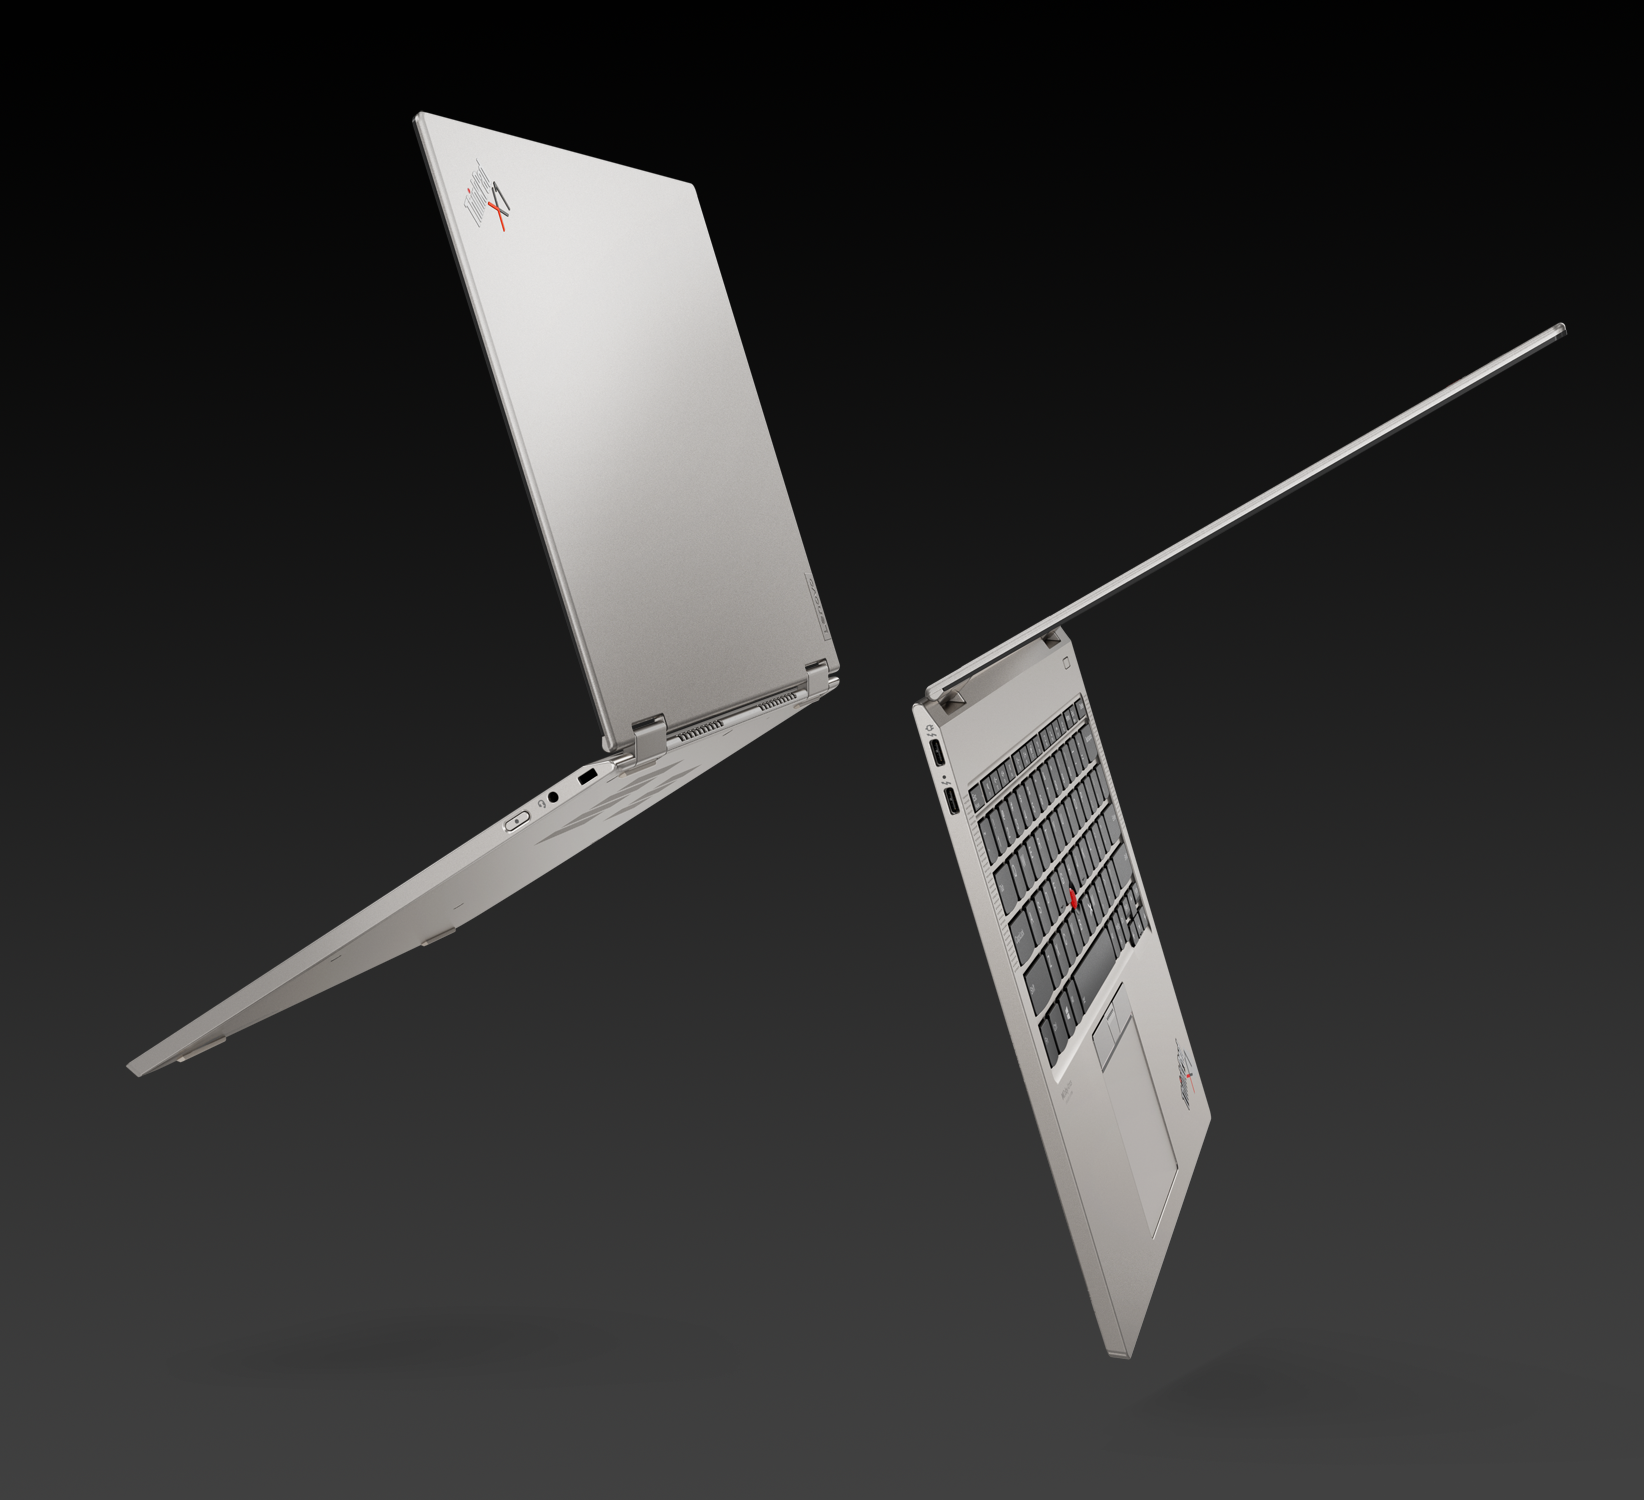 Lenovo ThinkPad X1 Titanium Yoga is the first 3:2 Yoga convertible